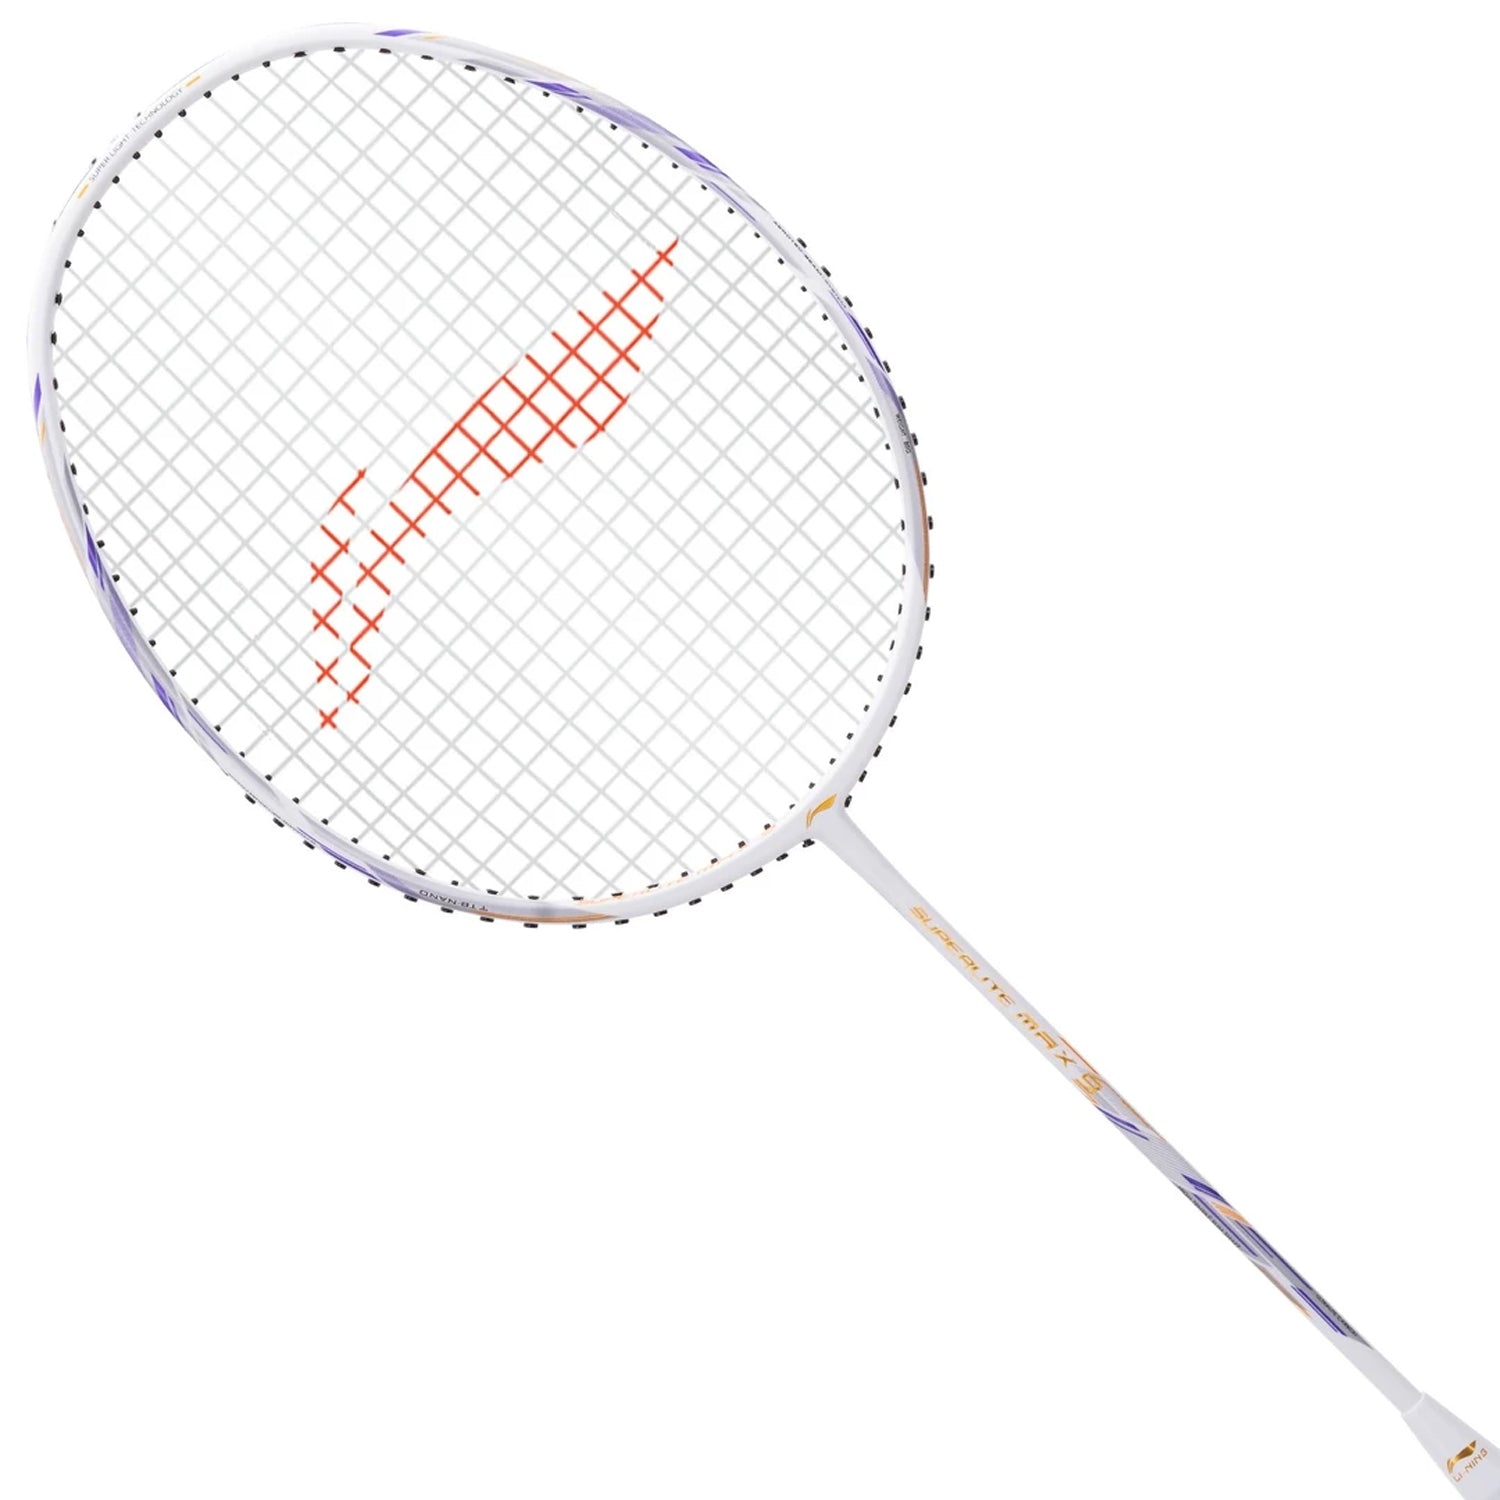 Li-Ning G-Force Superlite Max 9 Strung Badminton Racquet, White/Purple - Best Price online Prokicksports.com